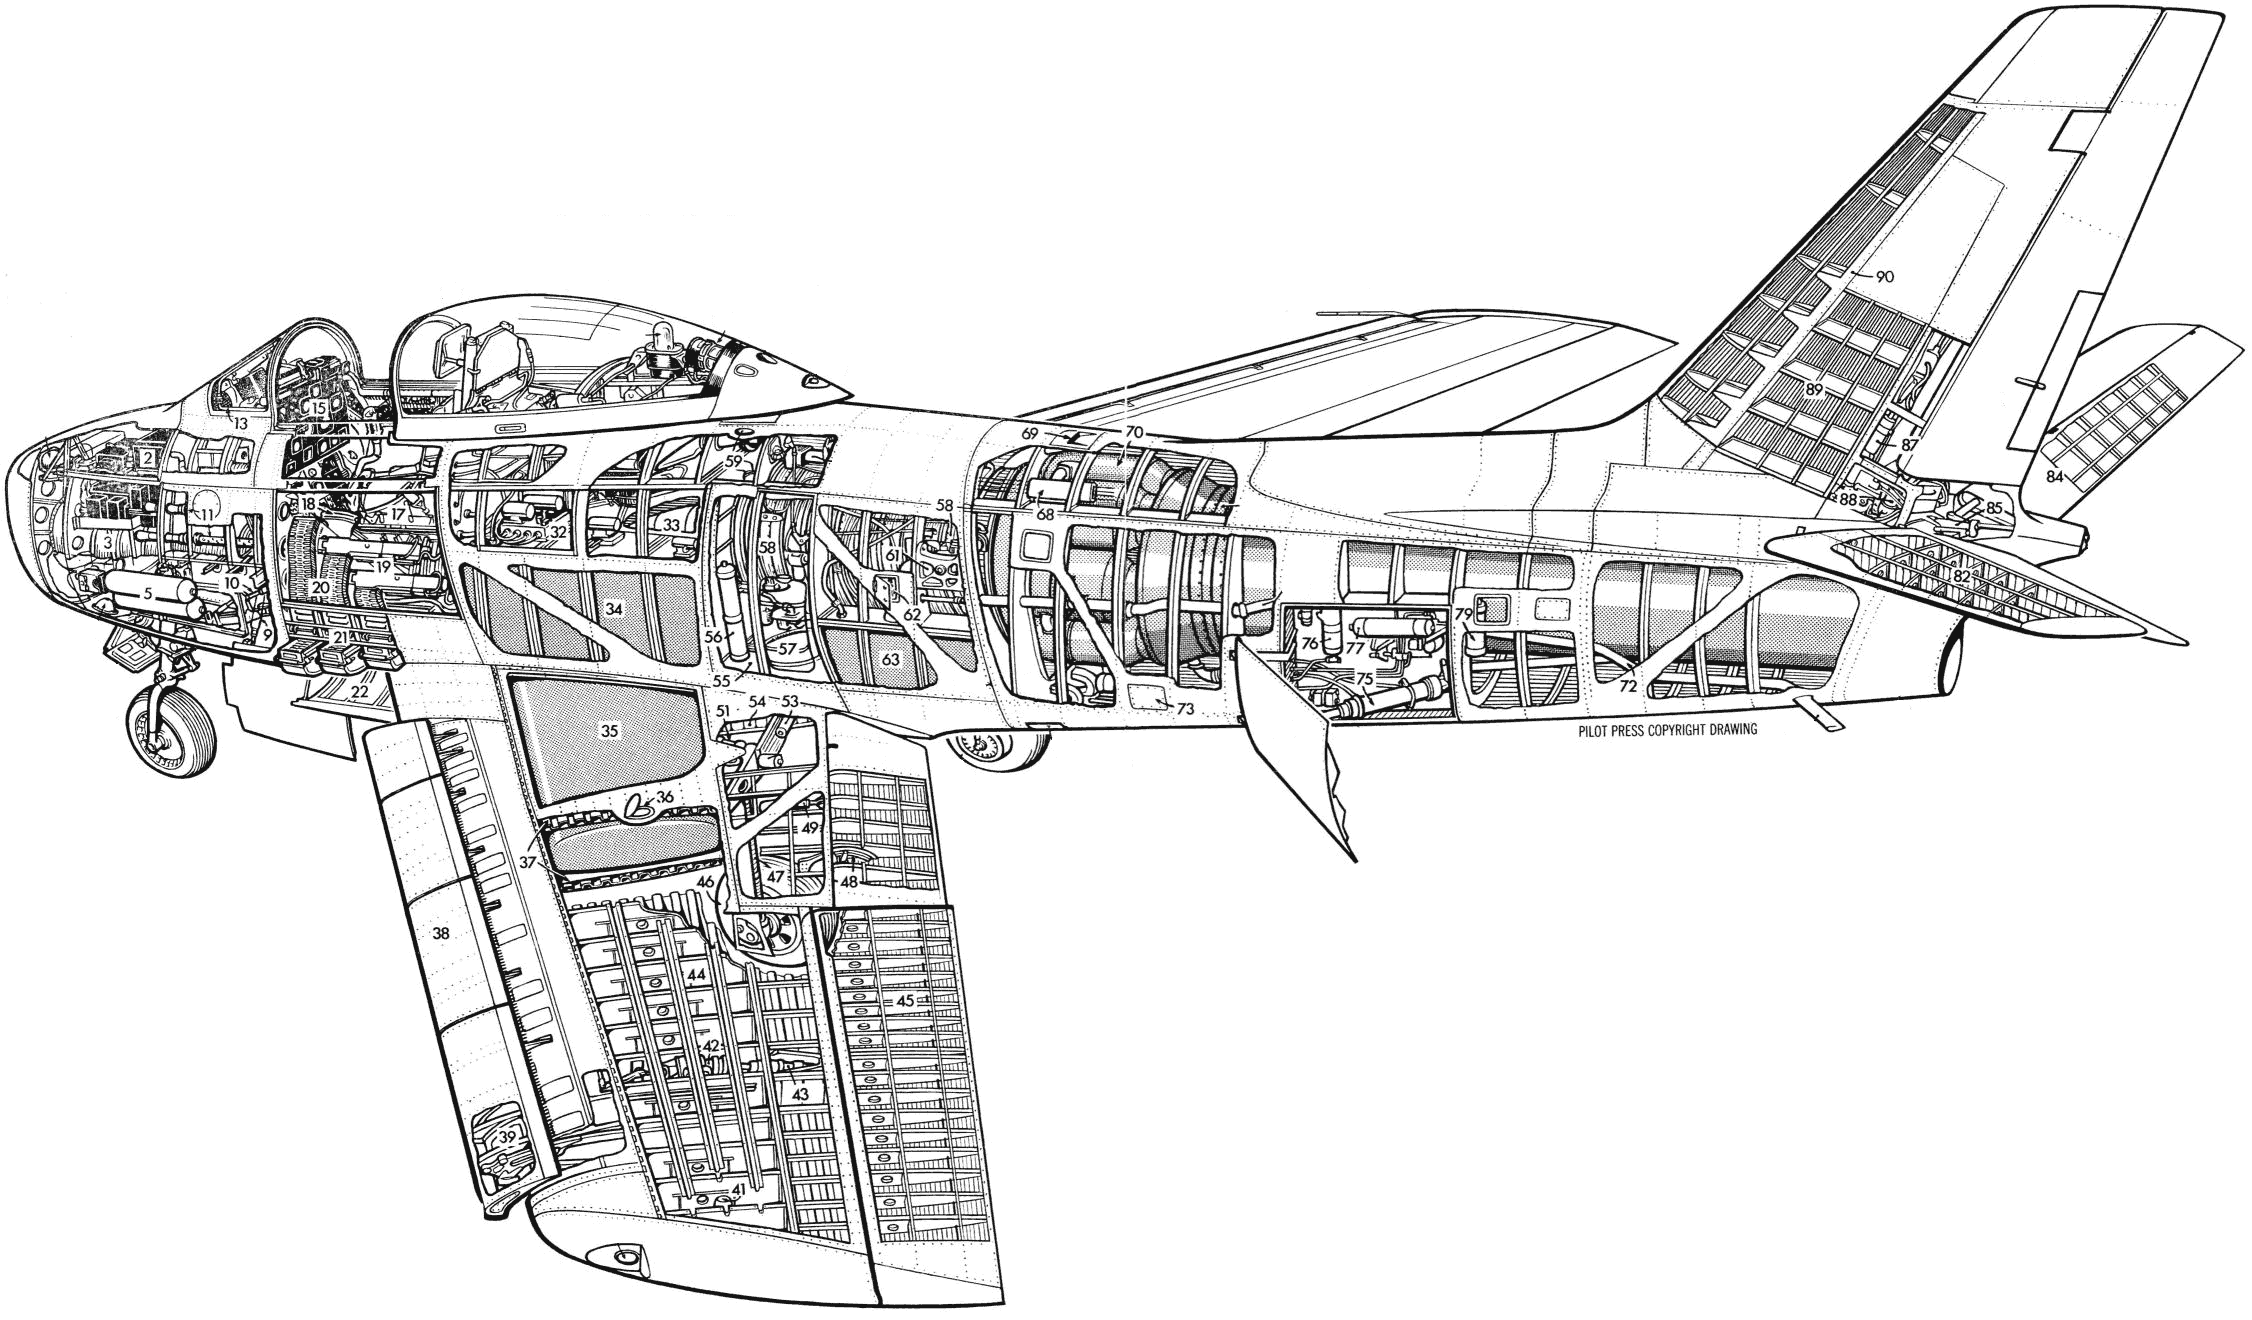 Canadair CL-13 Sabre cutaway drawing